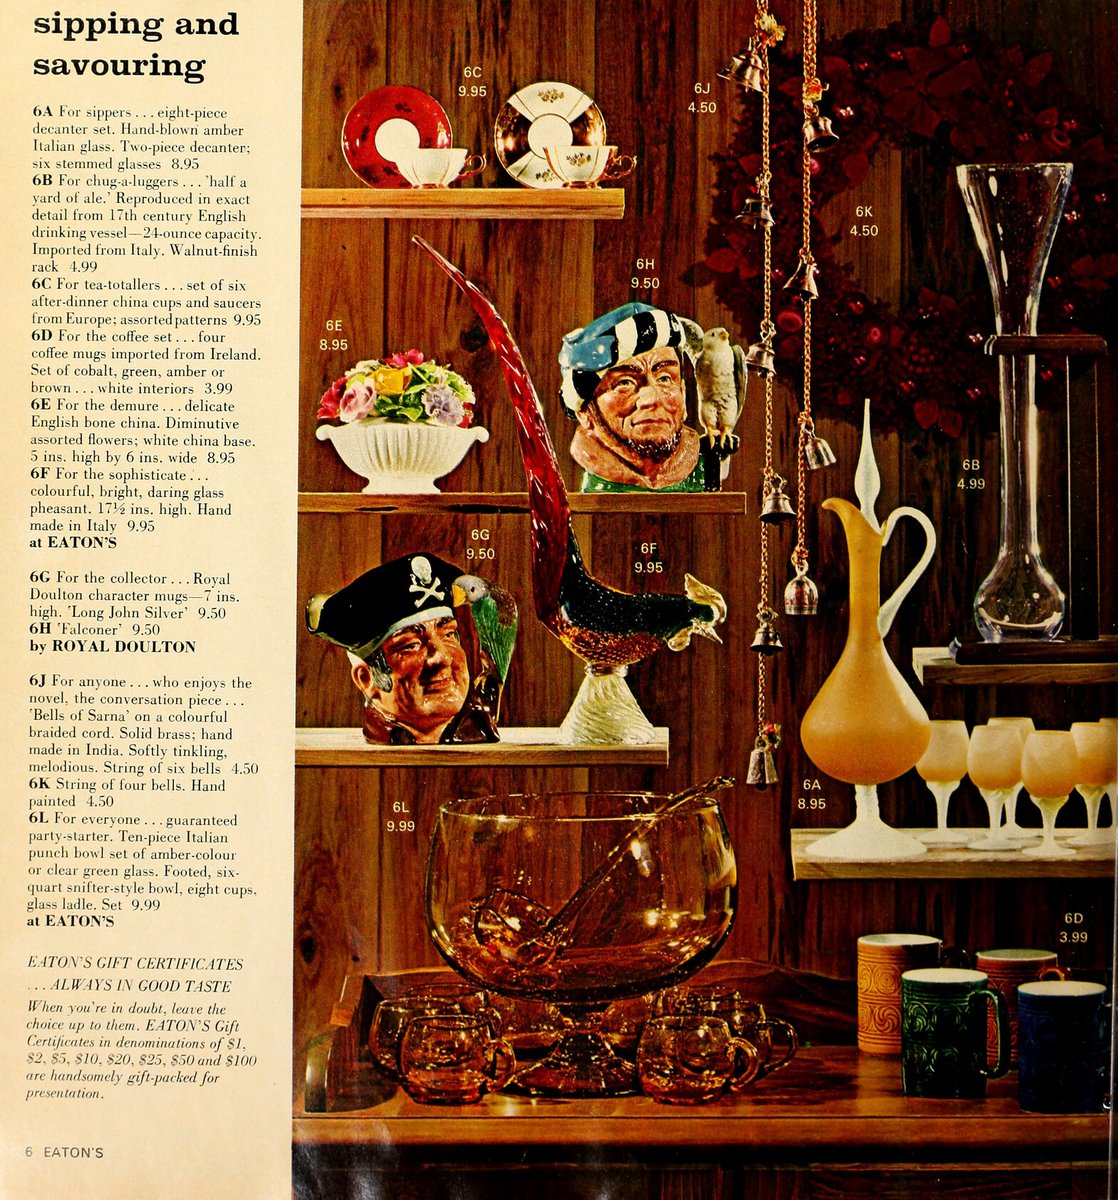 Eatons Catalogue 1953. #interiors #catalogues #vintage